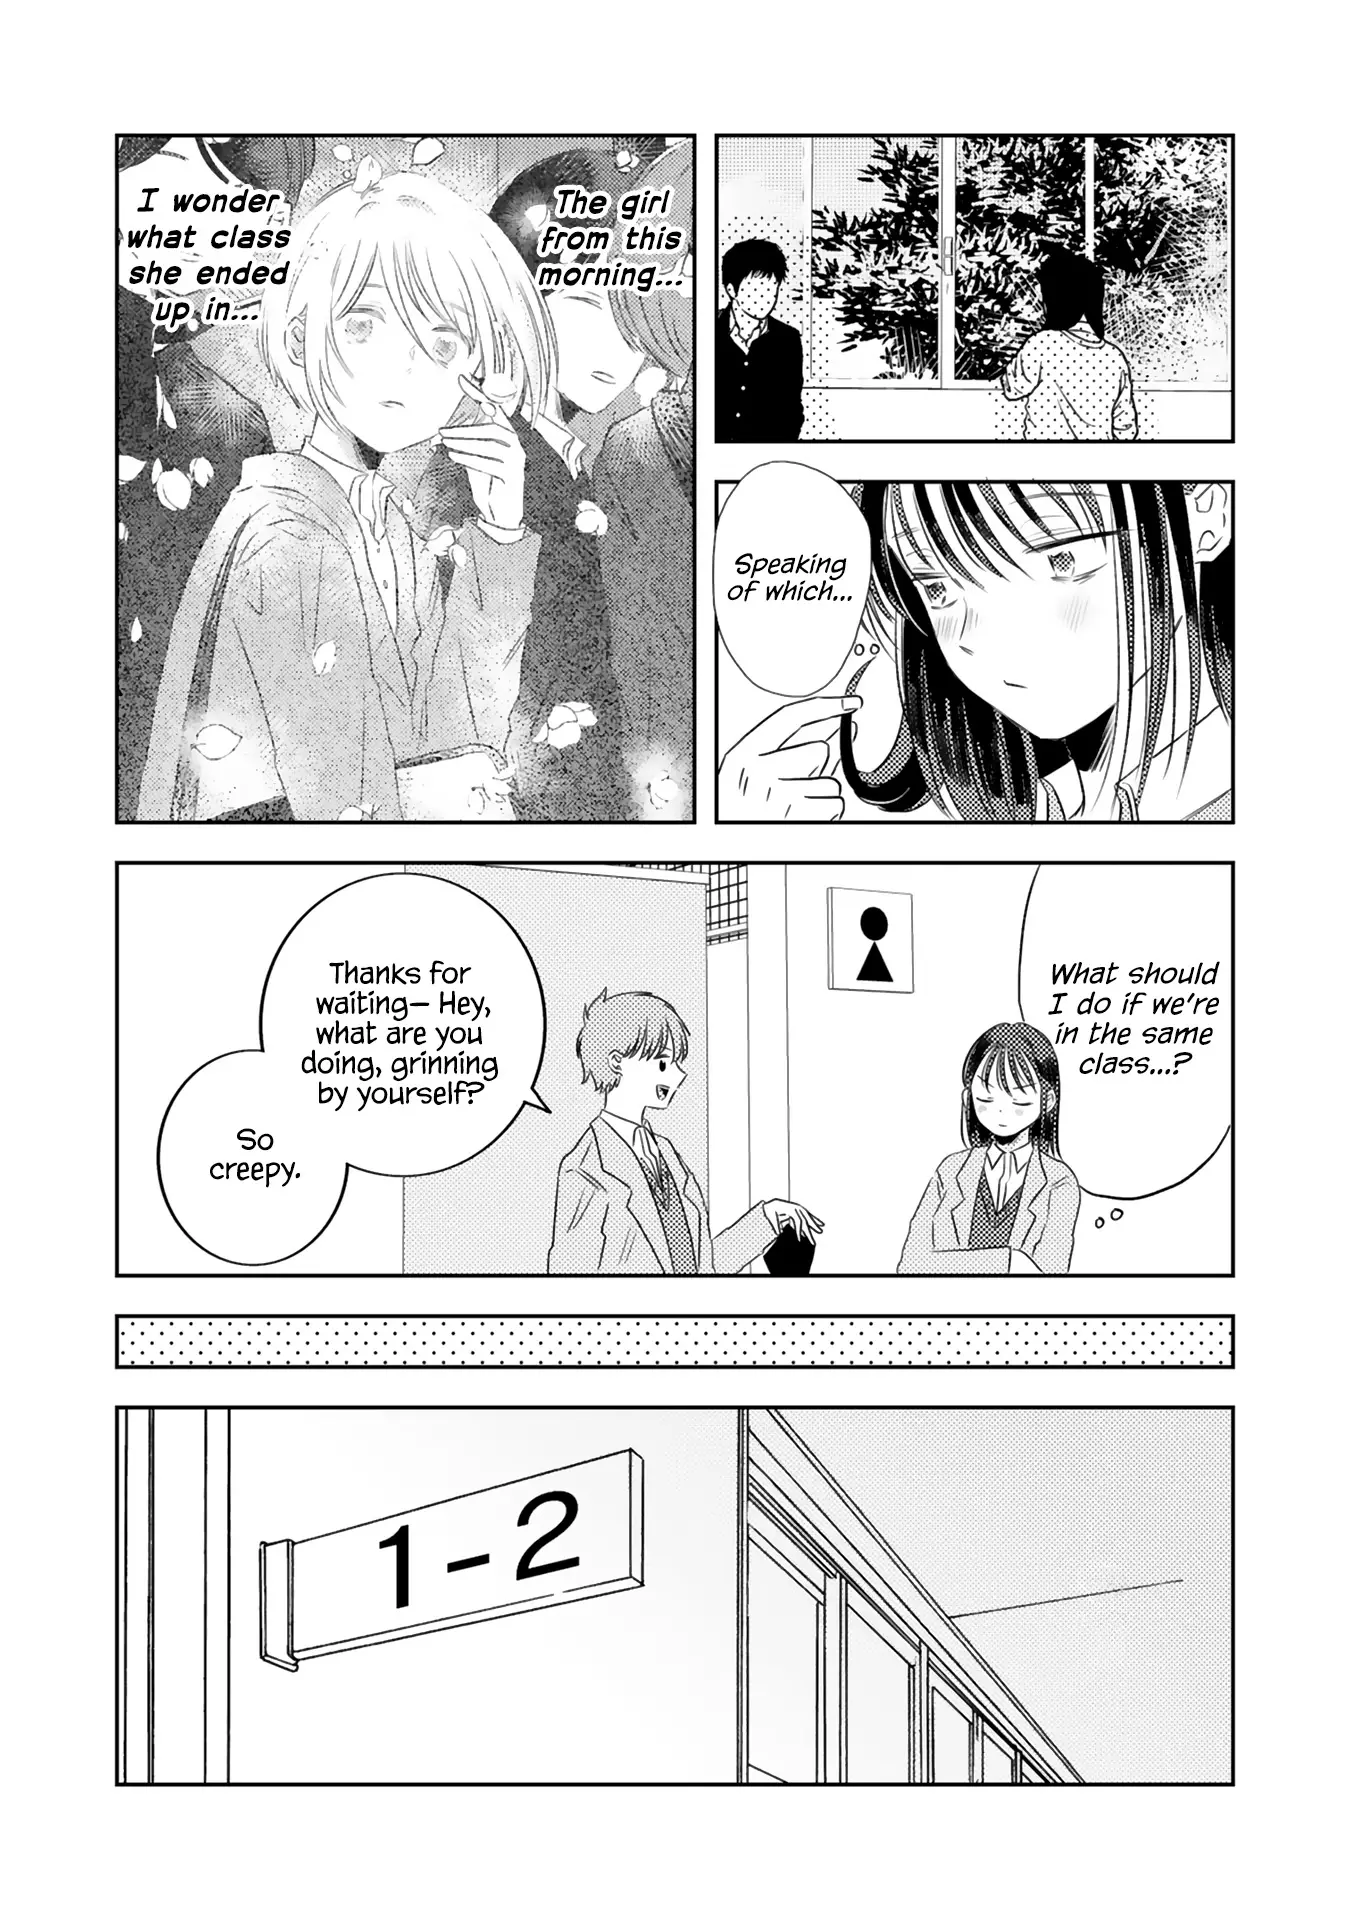 Futsuu No Koitte Nani? - 4 page 2-4af37825